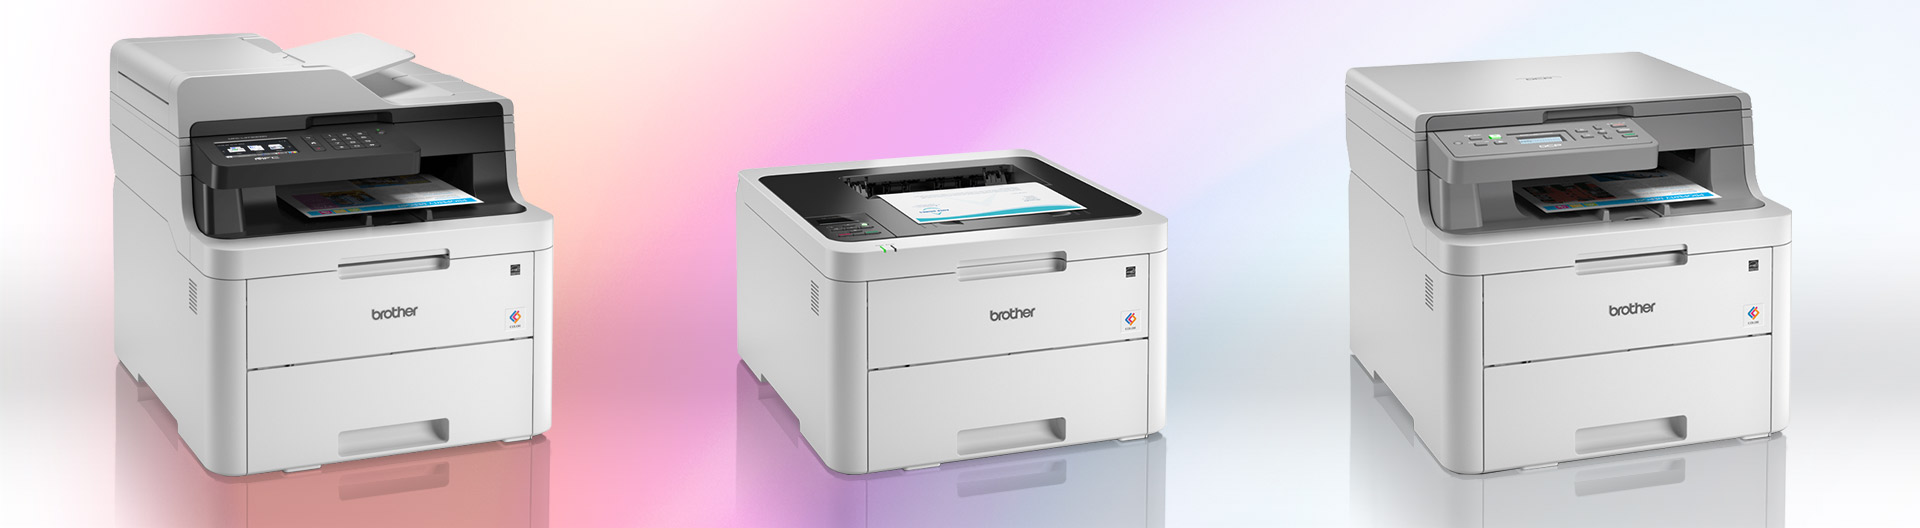 Brother MFC-L3750CDW imprimante multifonction laser couleur 